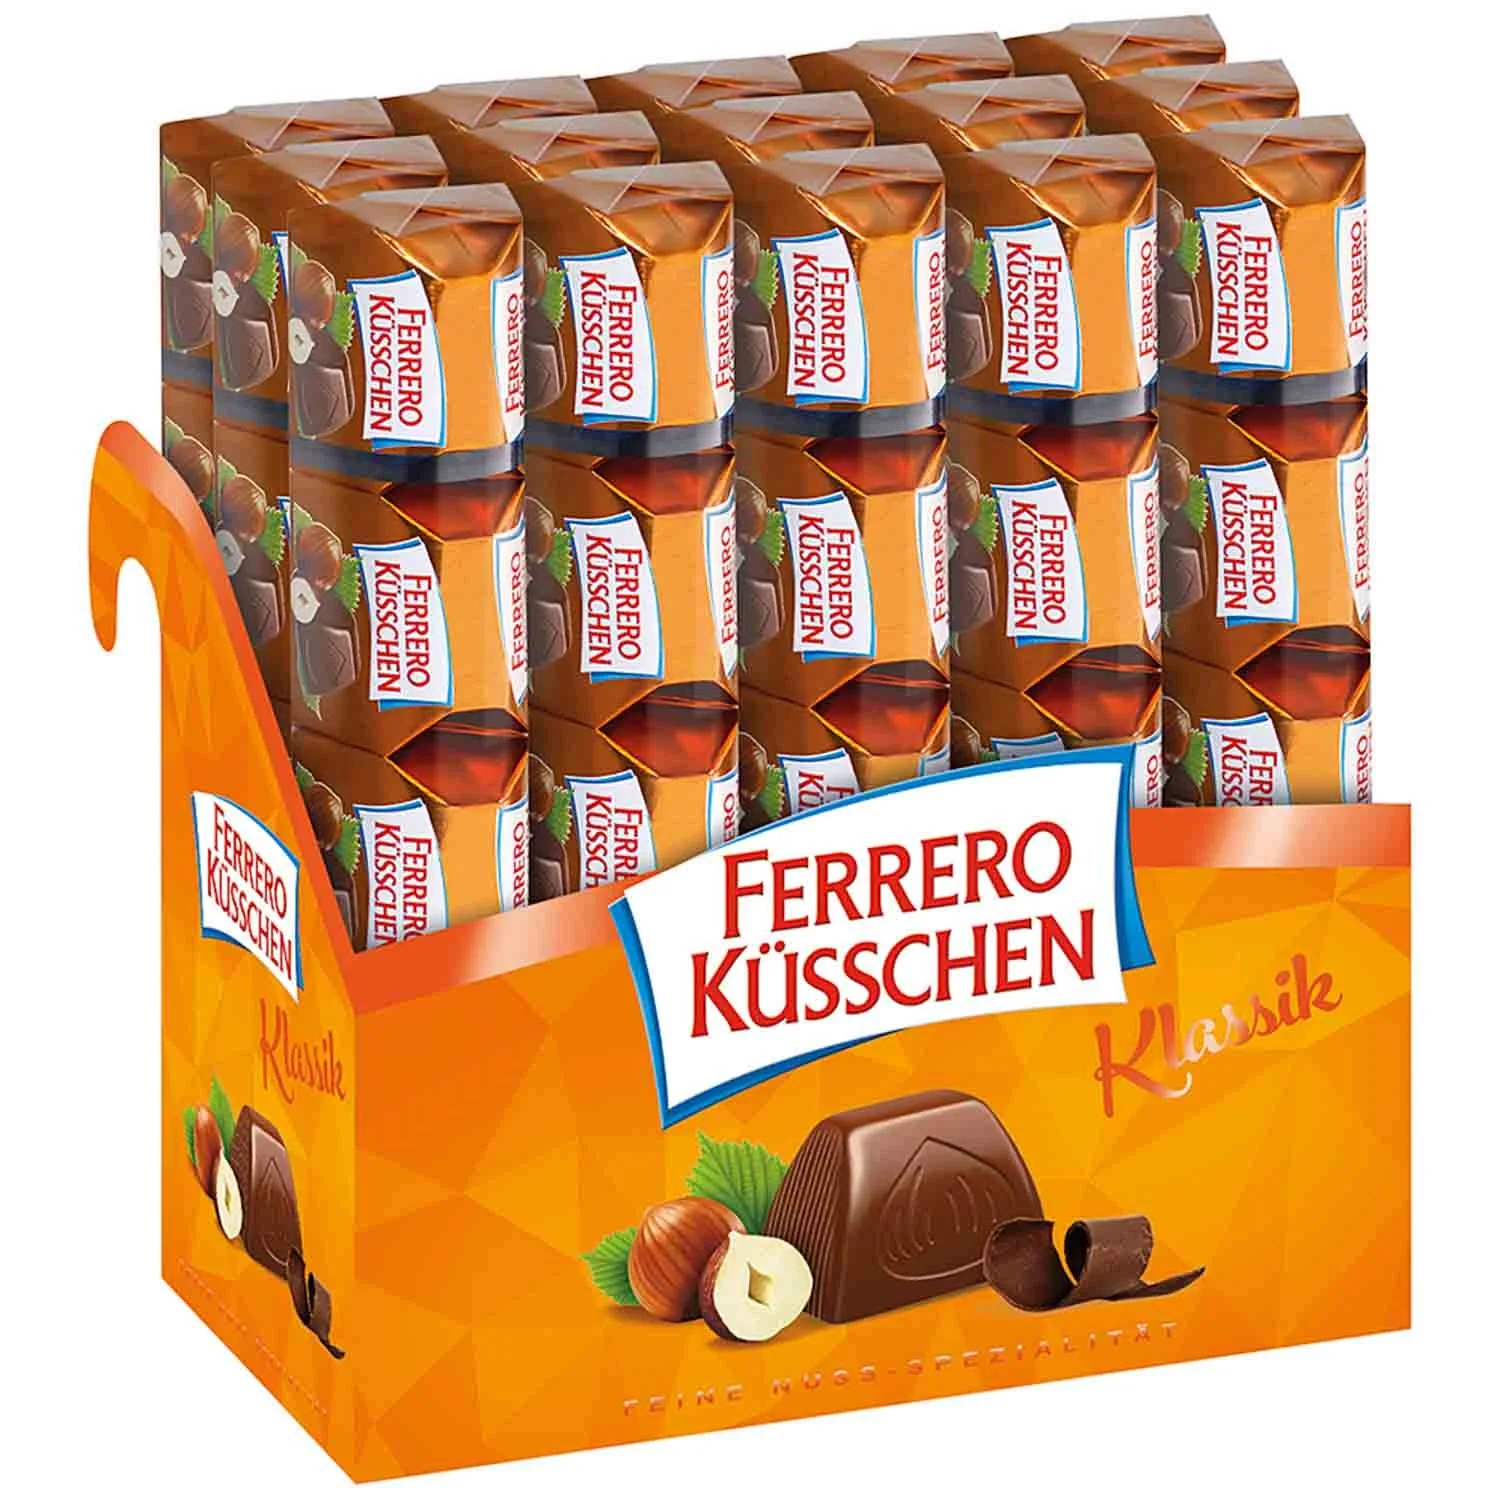 Advertising mini-cube with ferrero küsschen, Ferrero sweets, Chocolates